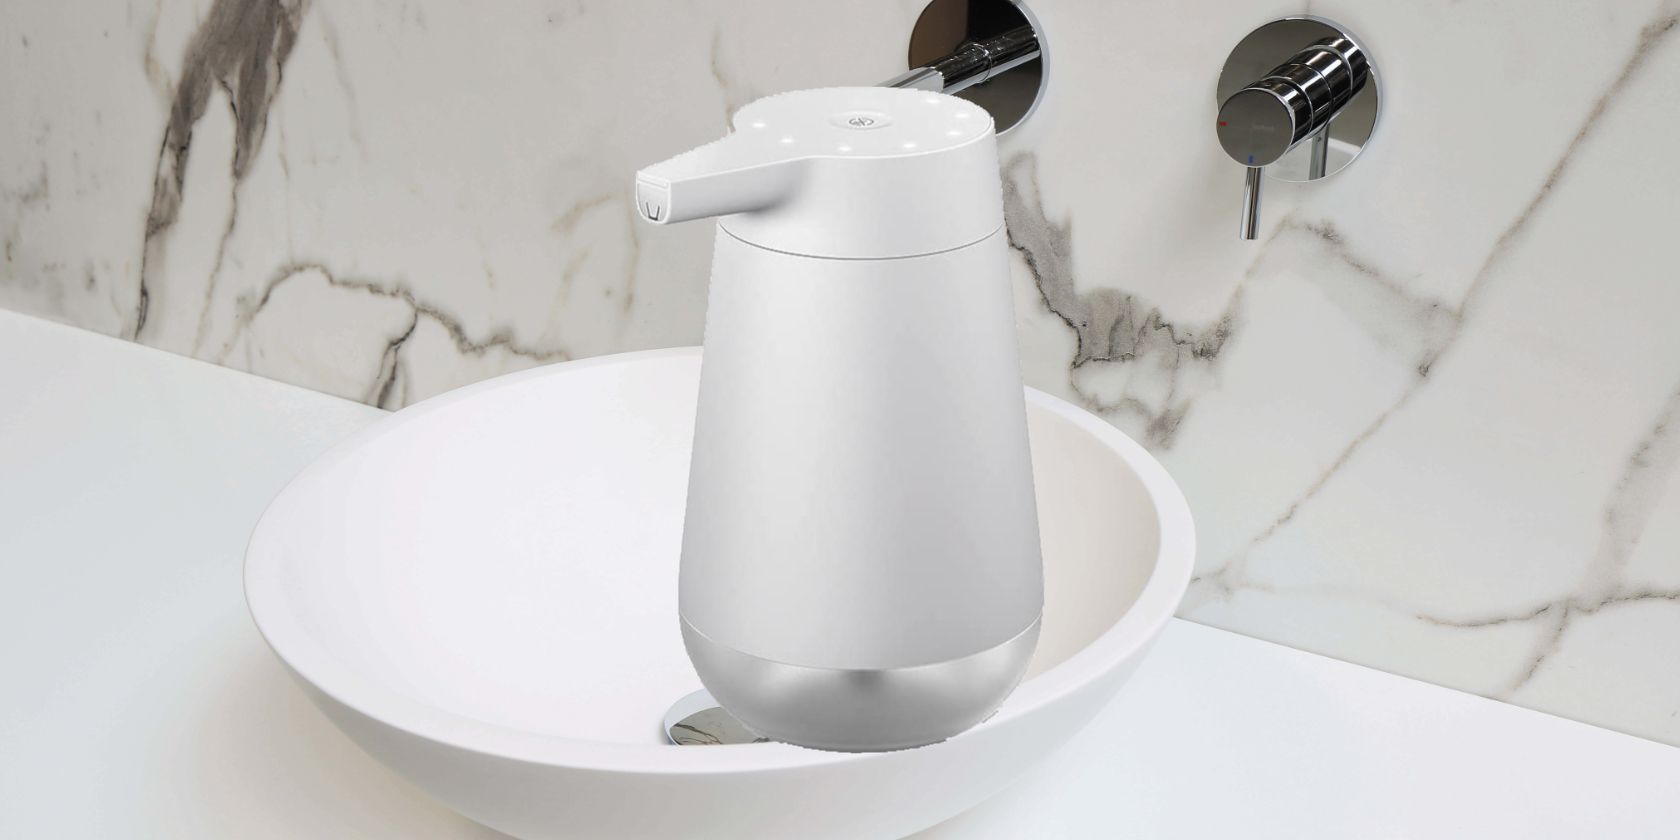 Amazon smart soap dispenser in front of bathroom sink